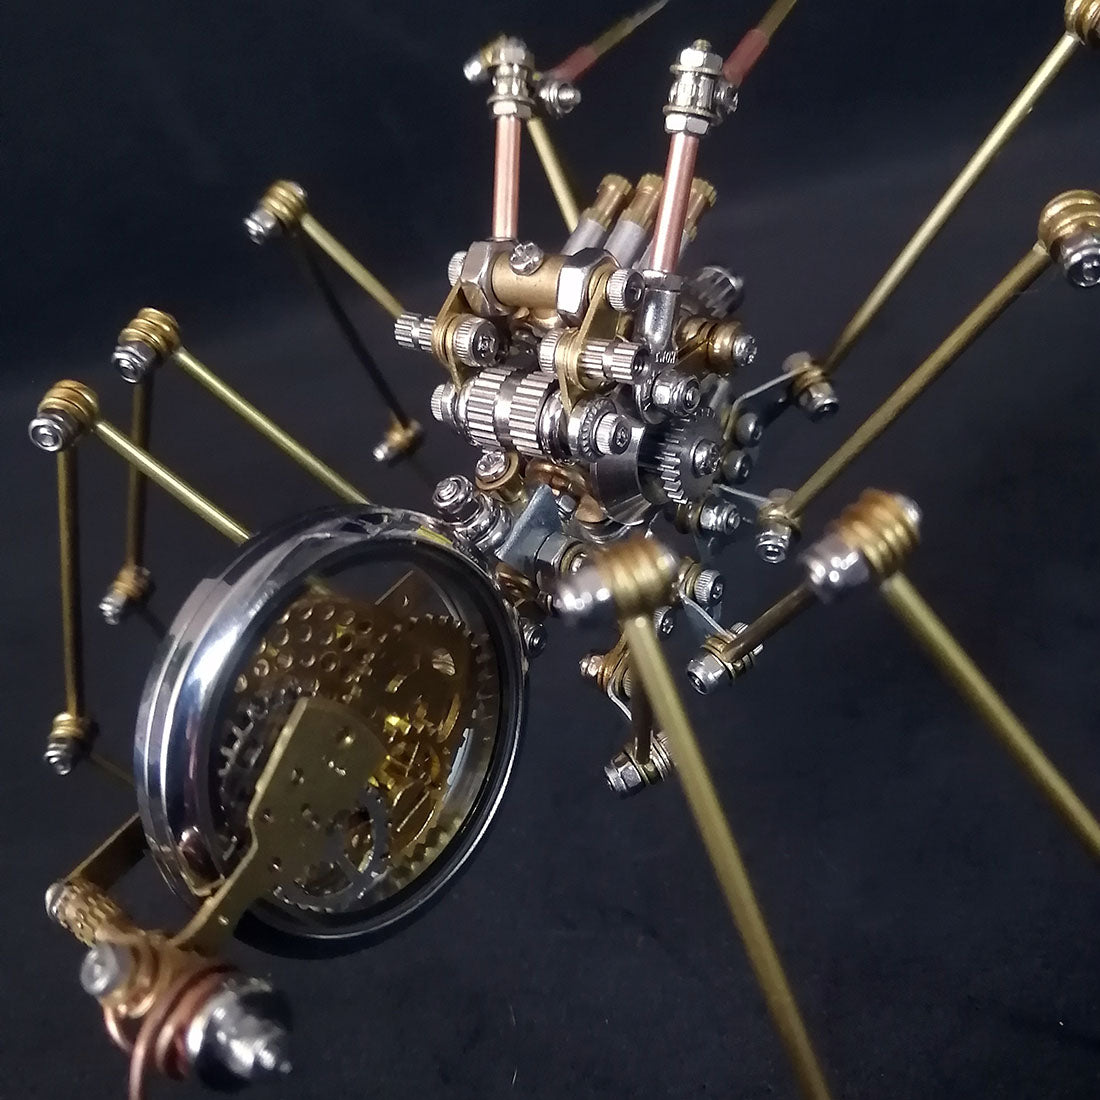 Steampunk Spider with Antique Watch Western Art Metal Model Kits